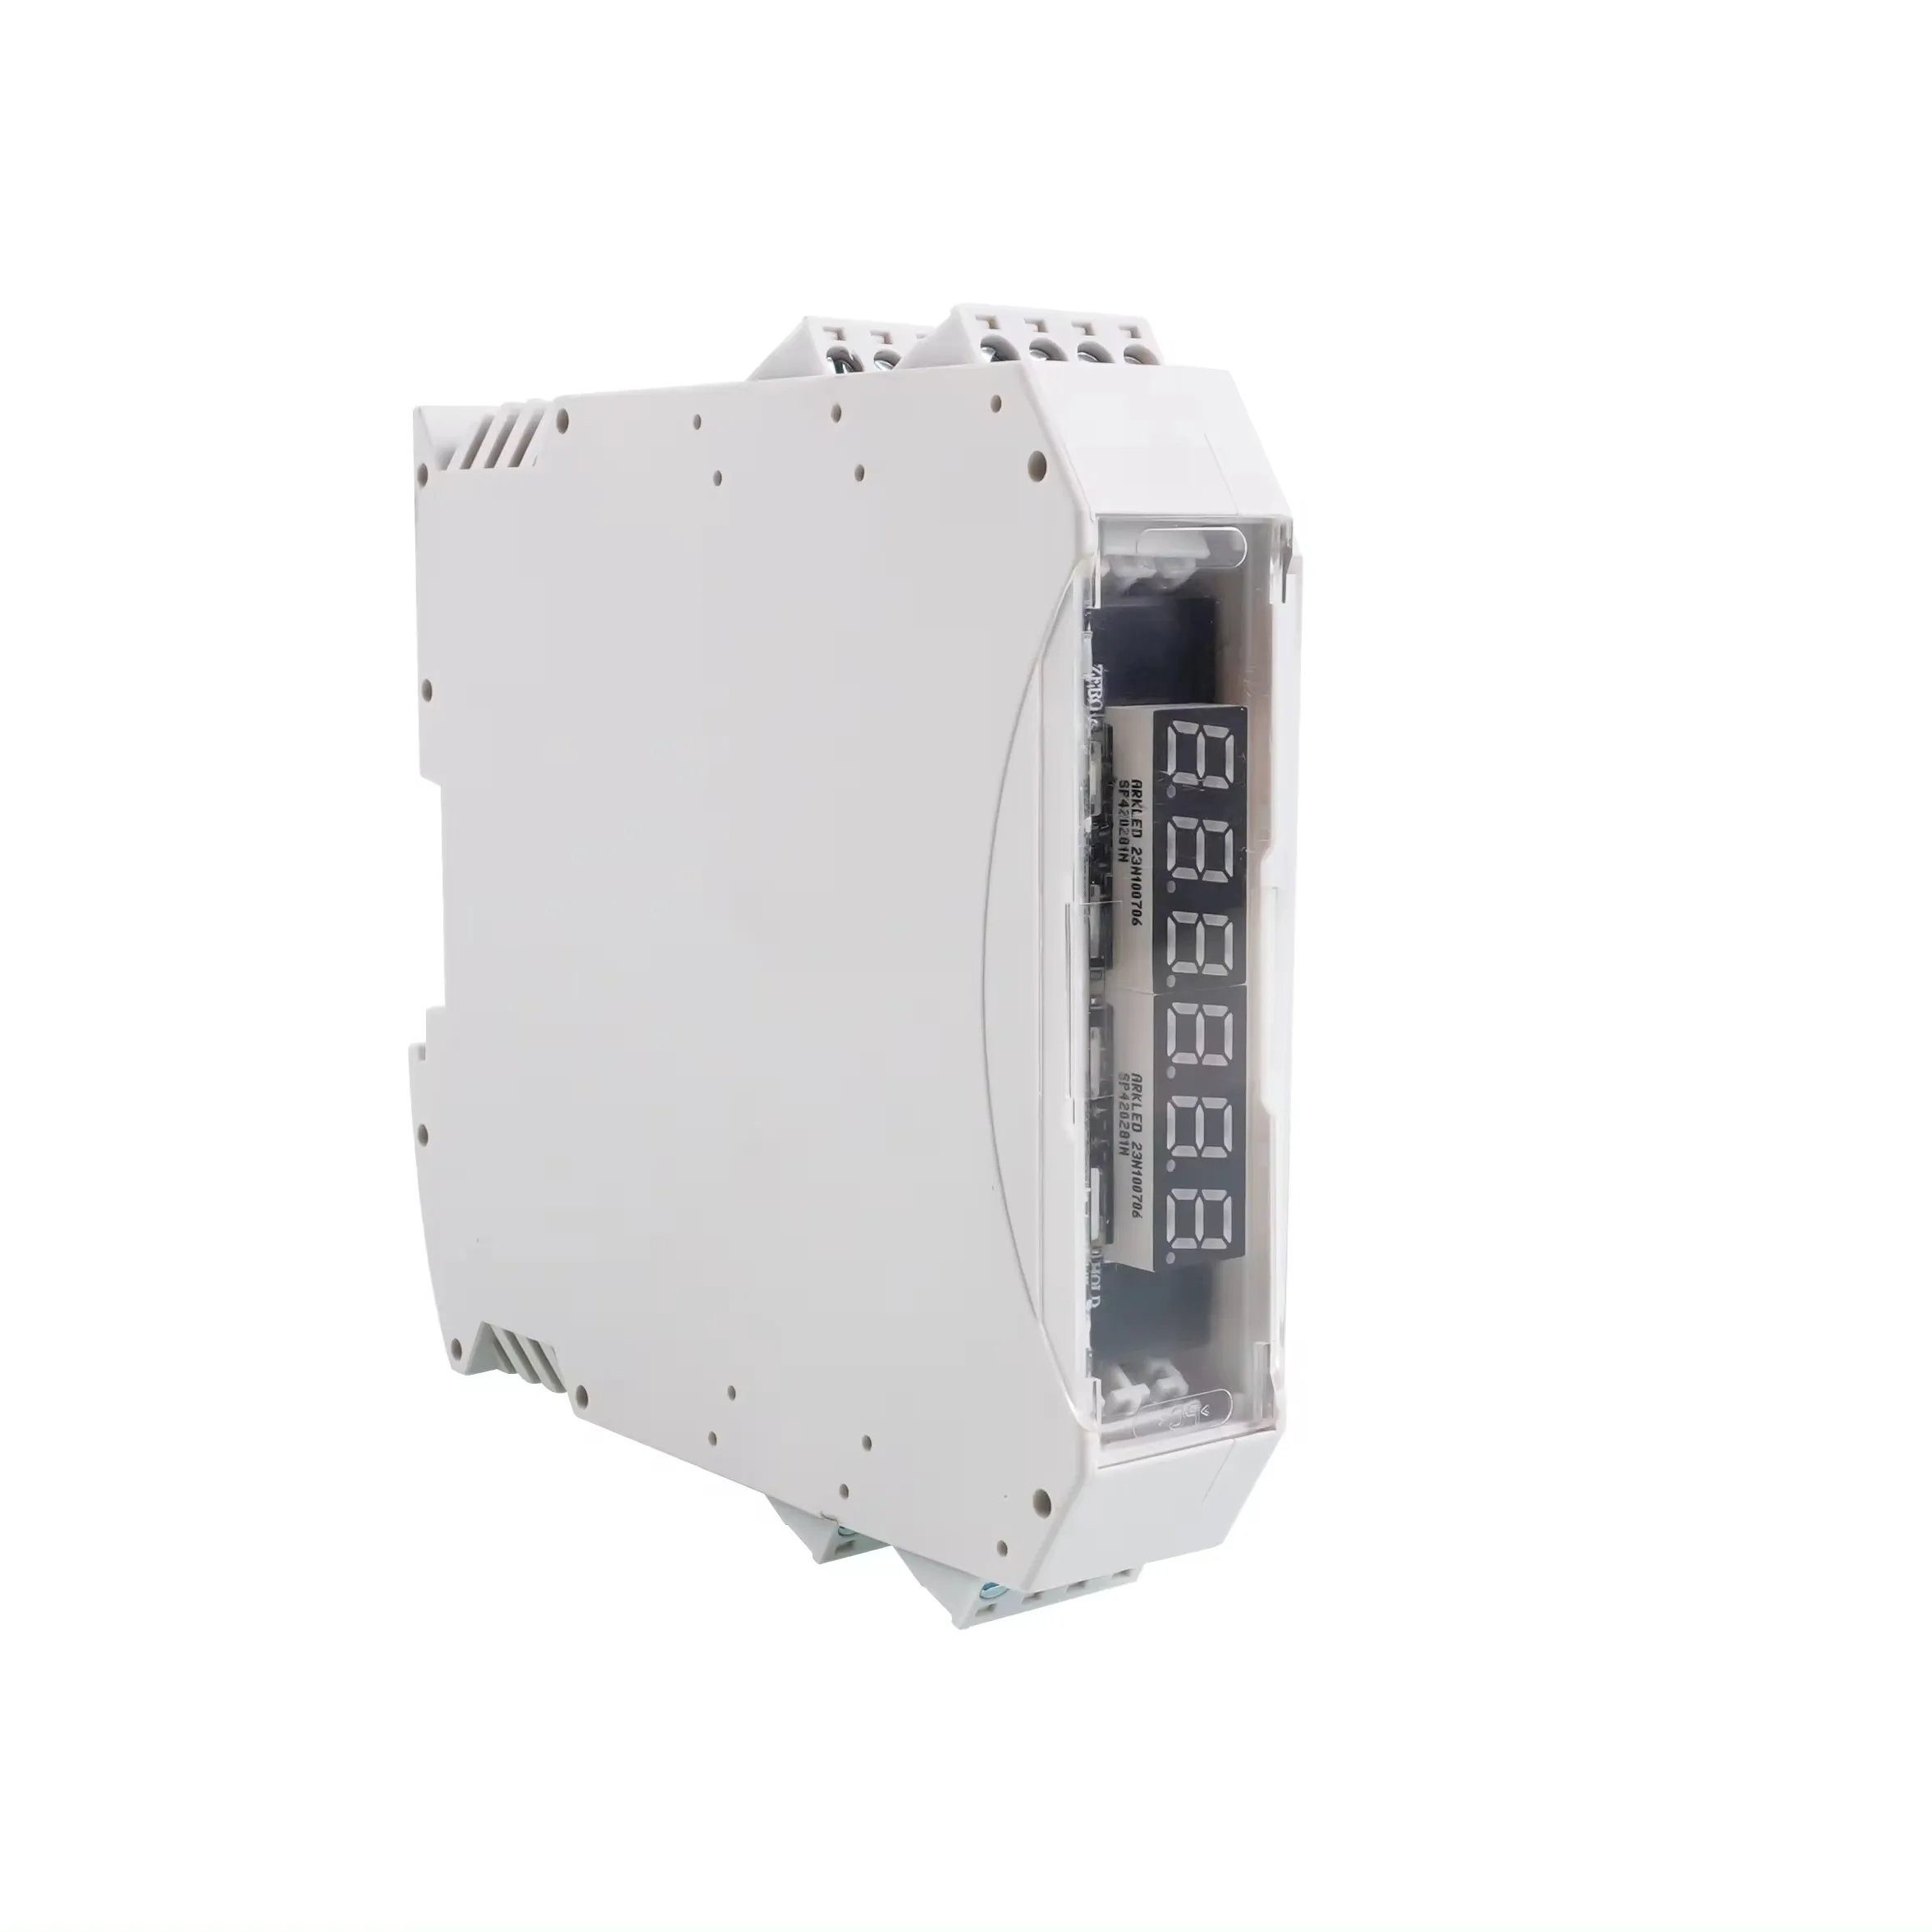 TM35 Distribuidor atacadista preço a granel transmissor de peso digital amplificador de tensão amplificador indicador de peso saída RS485